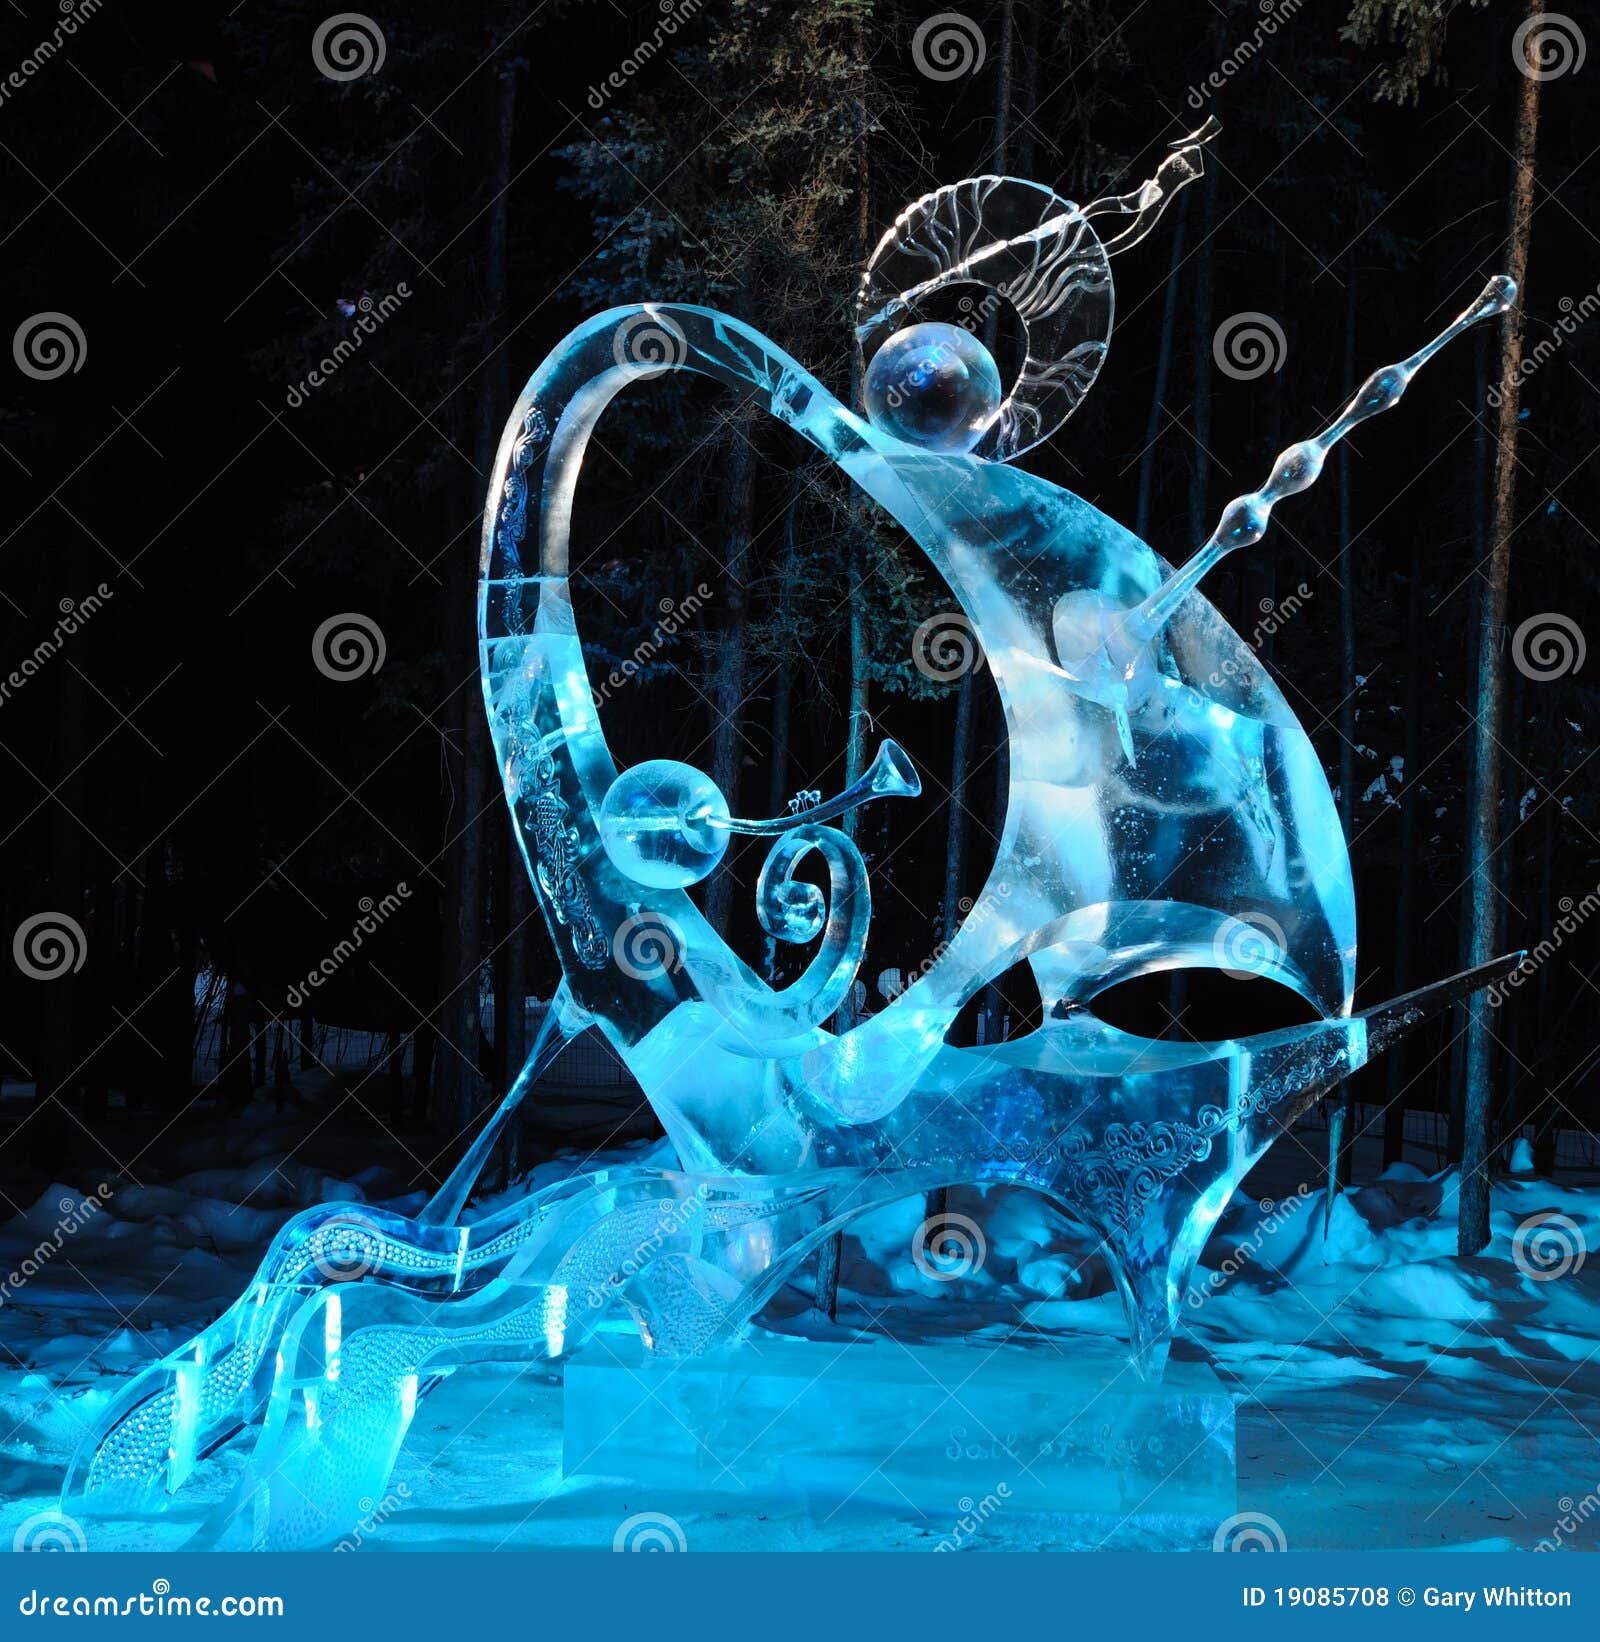 sail-love-ice-sculpture-19085708.jpg